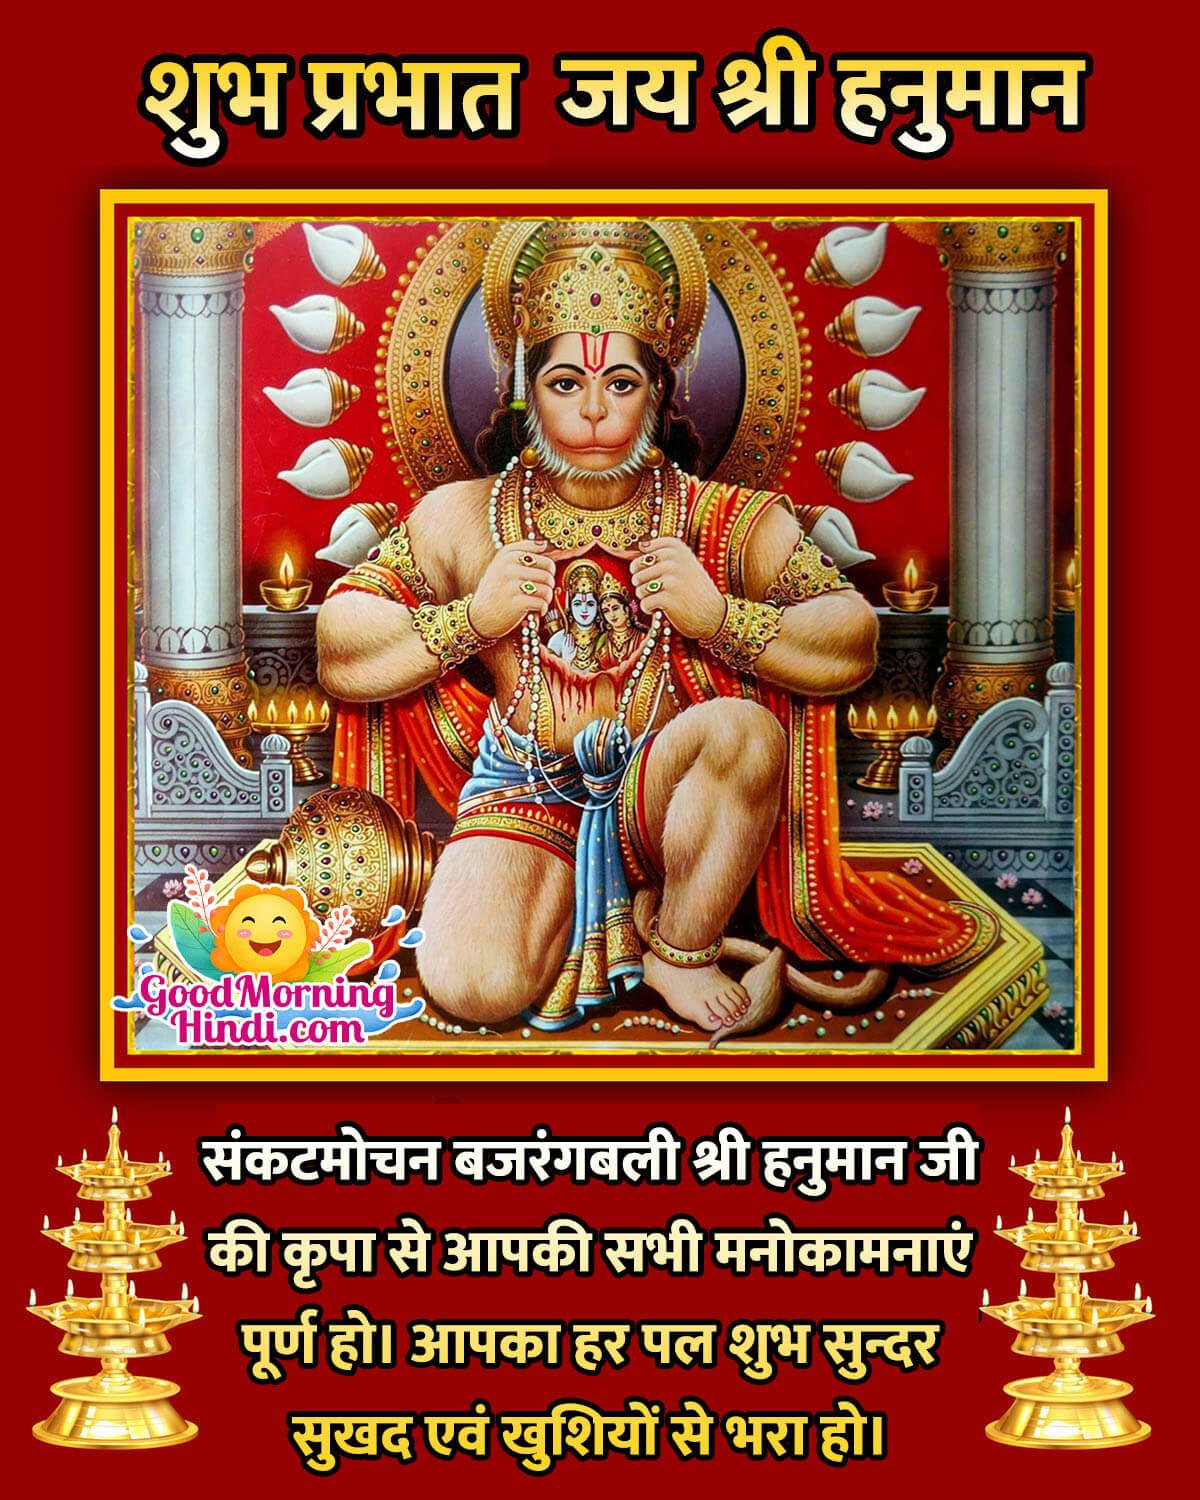 Good Morning Hanuman Images In Hindi Good Morning Wishes Images In Hindi